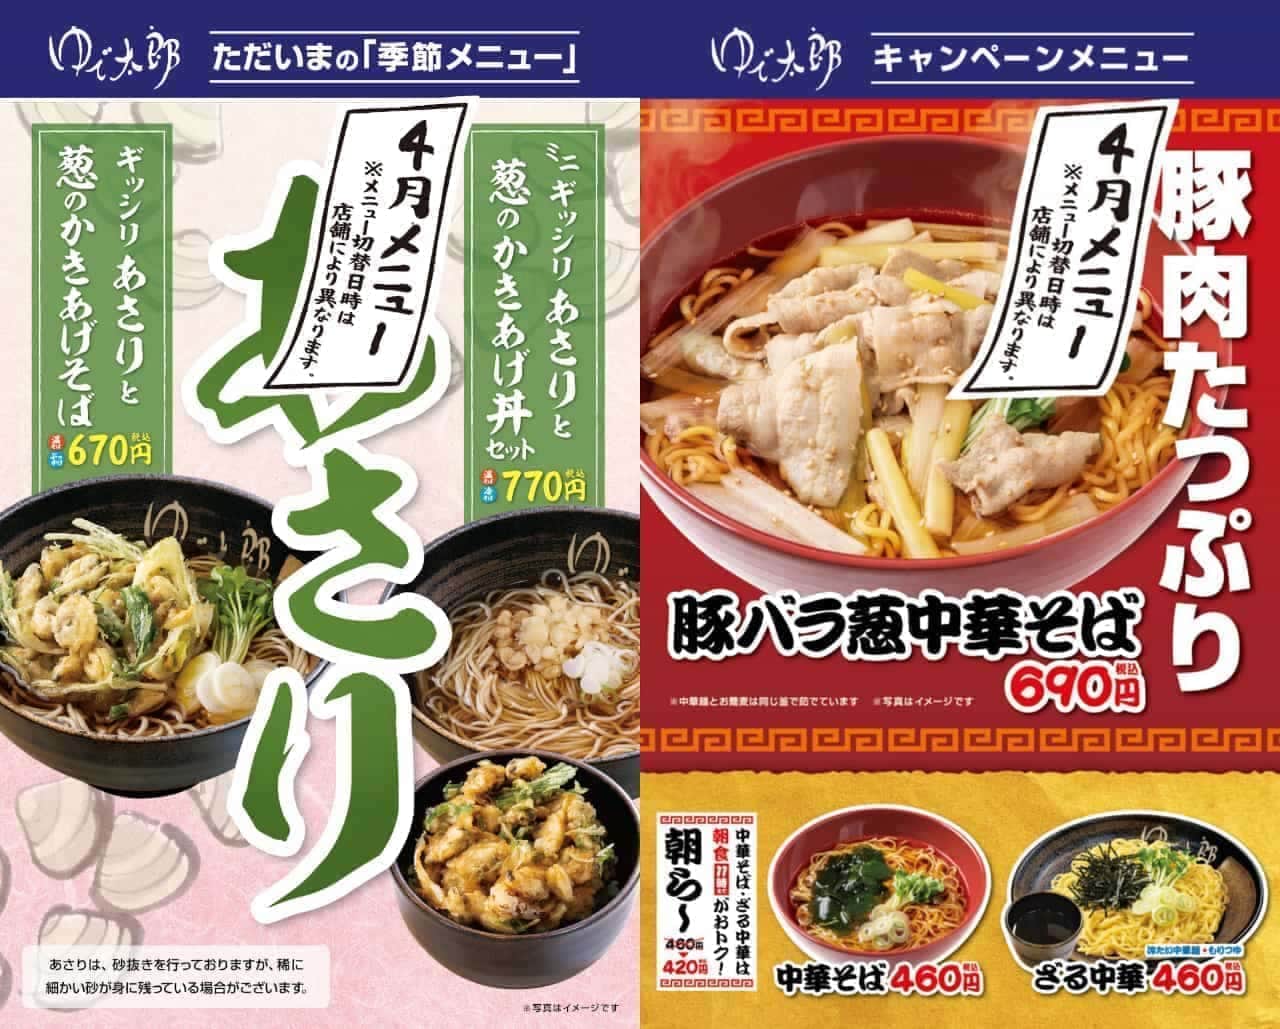 YUDETARO "Kakiage Soba with scallion and leek" and "Chinese Soba with pork belly and leek